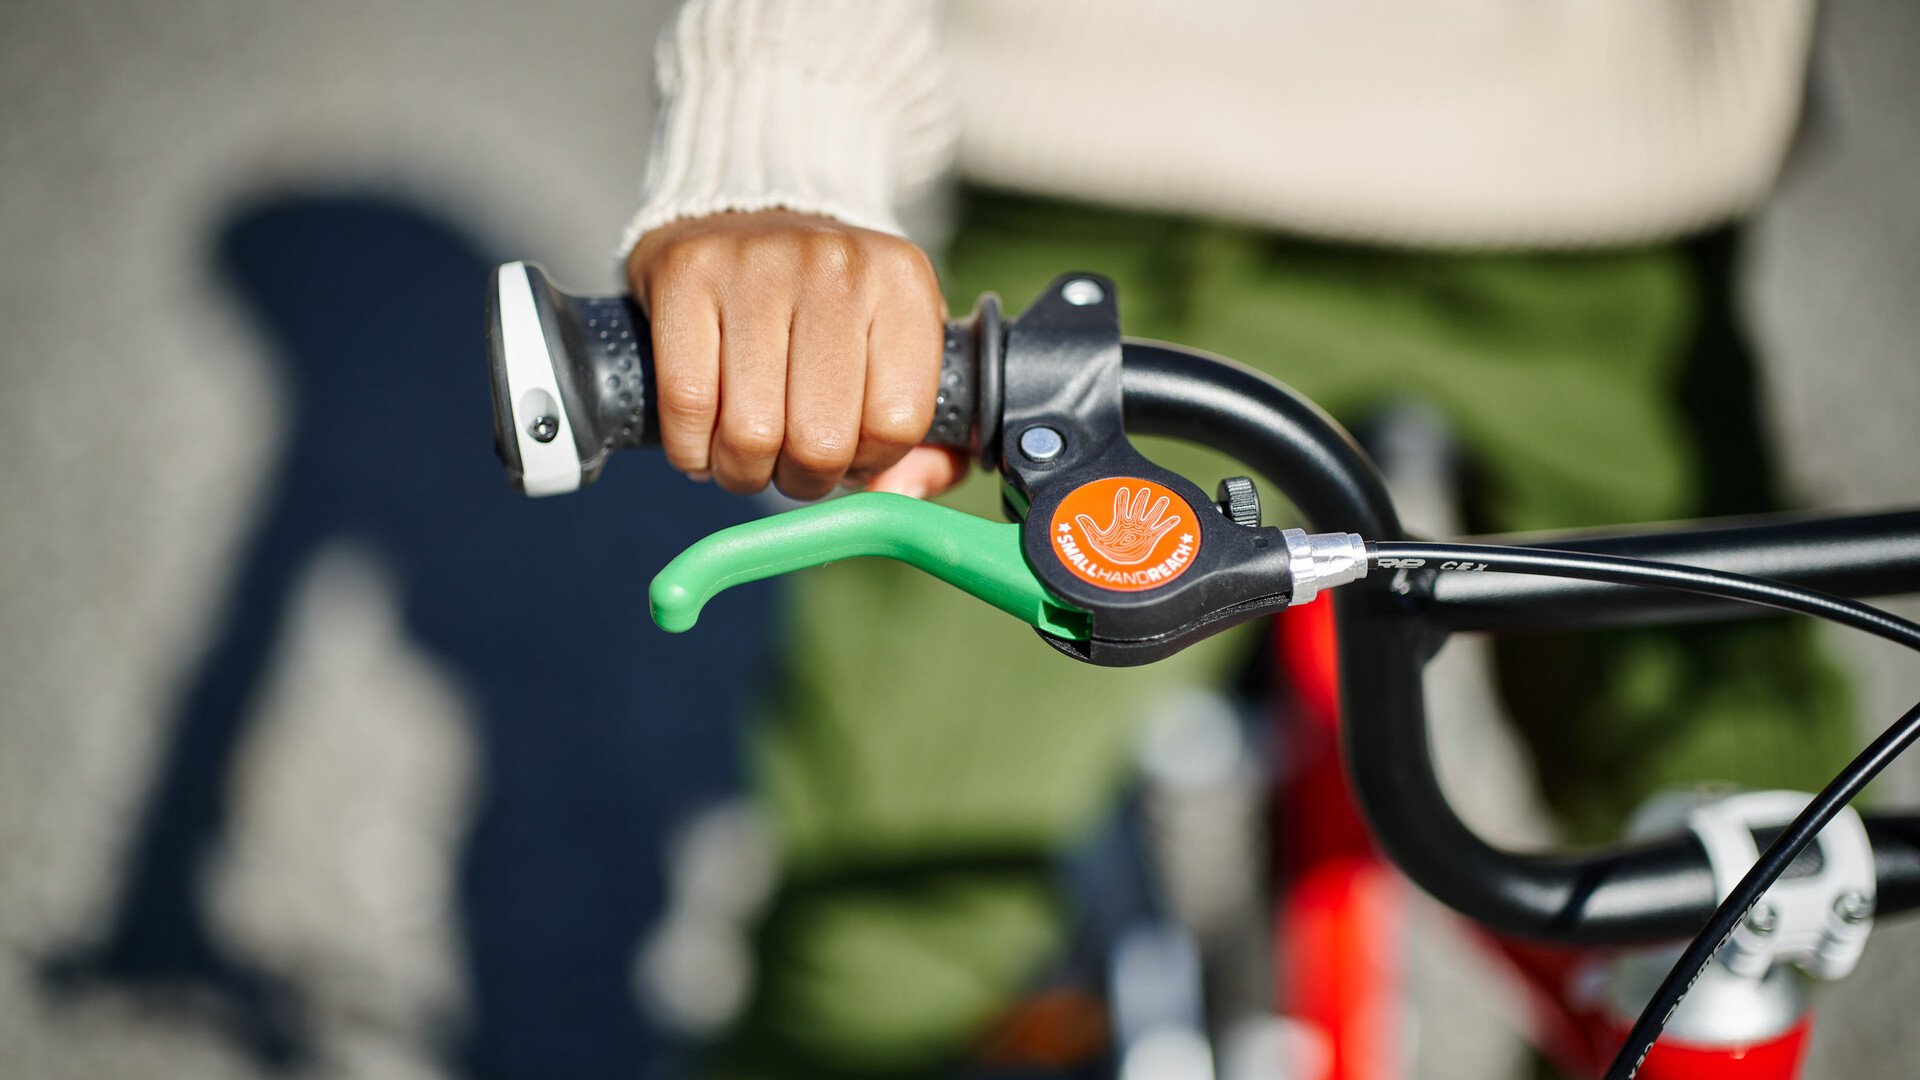 Detailaufnahme eines woom Fahrradlenkers samt grünem Bremshebel.